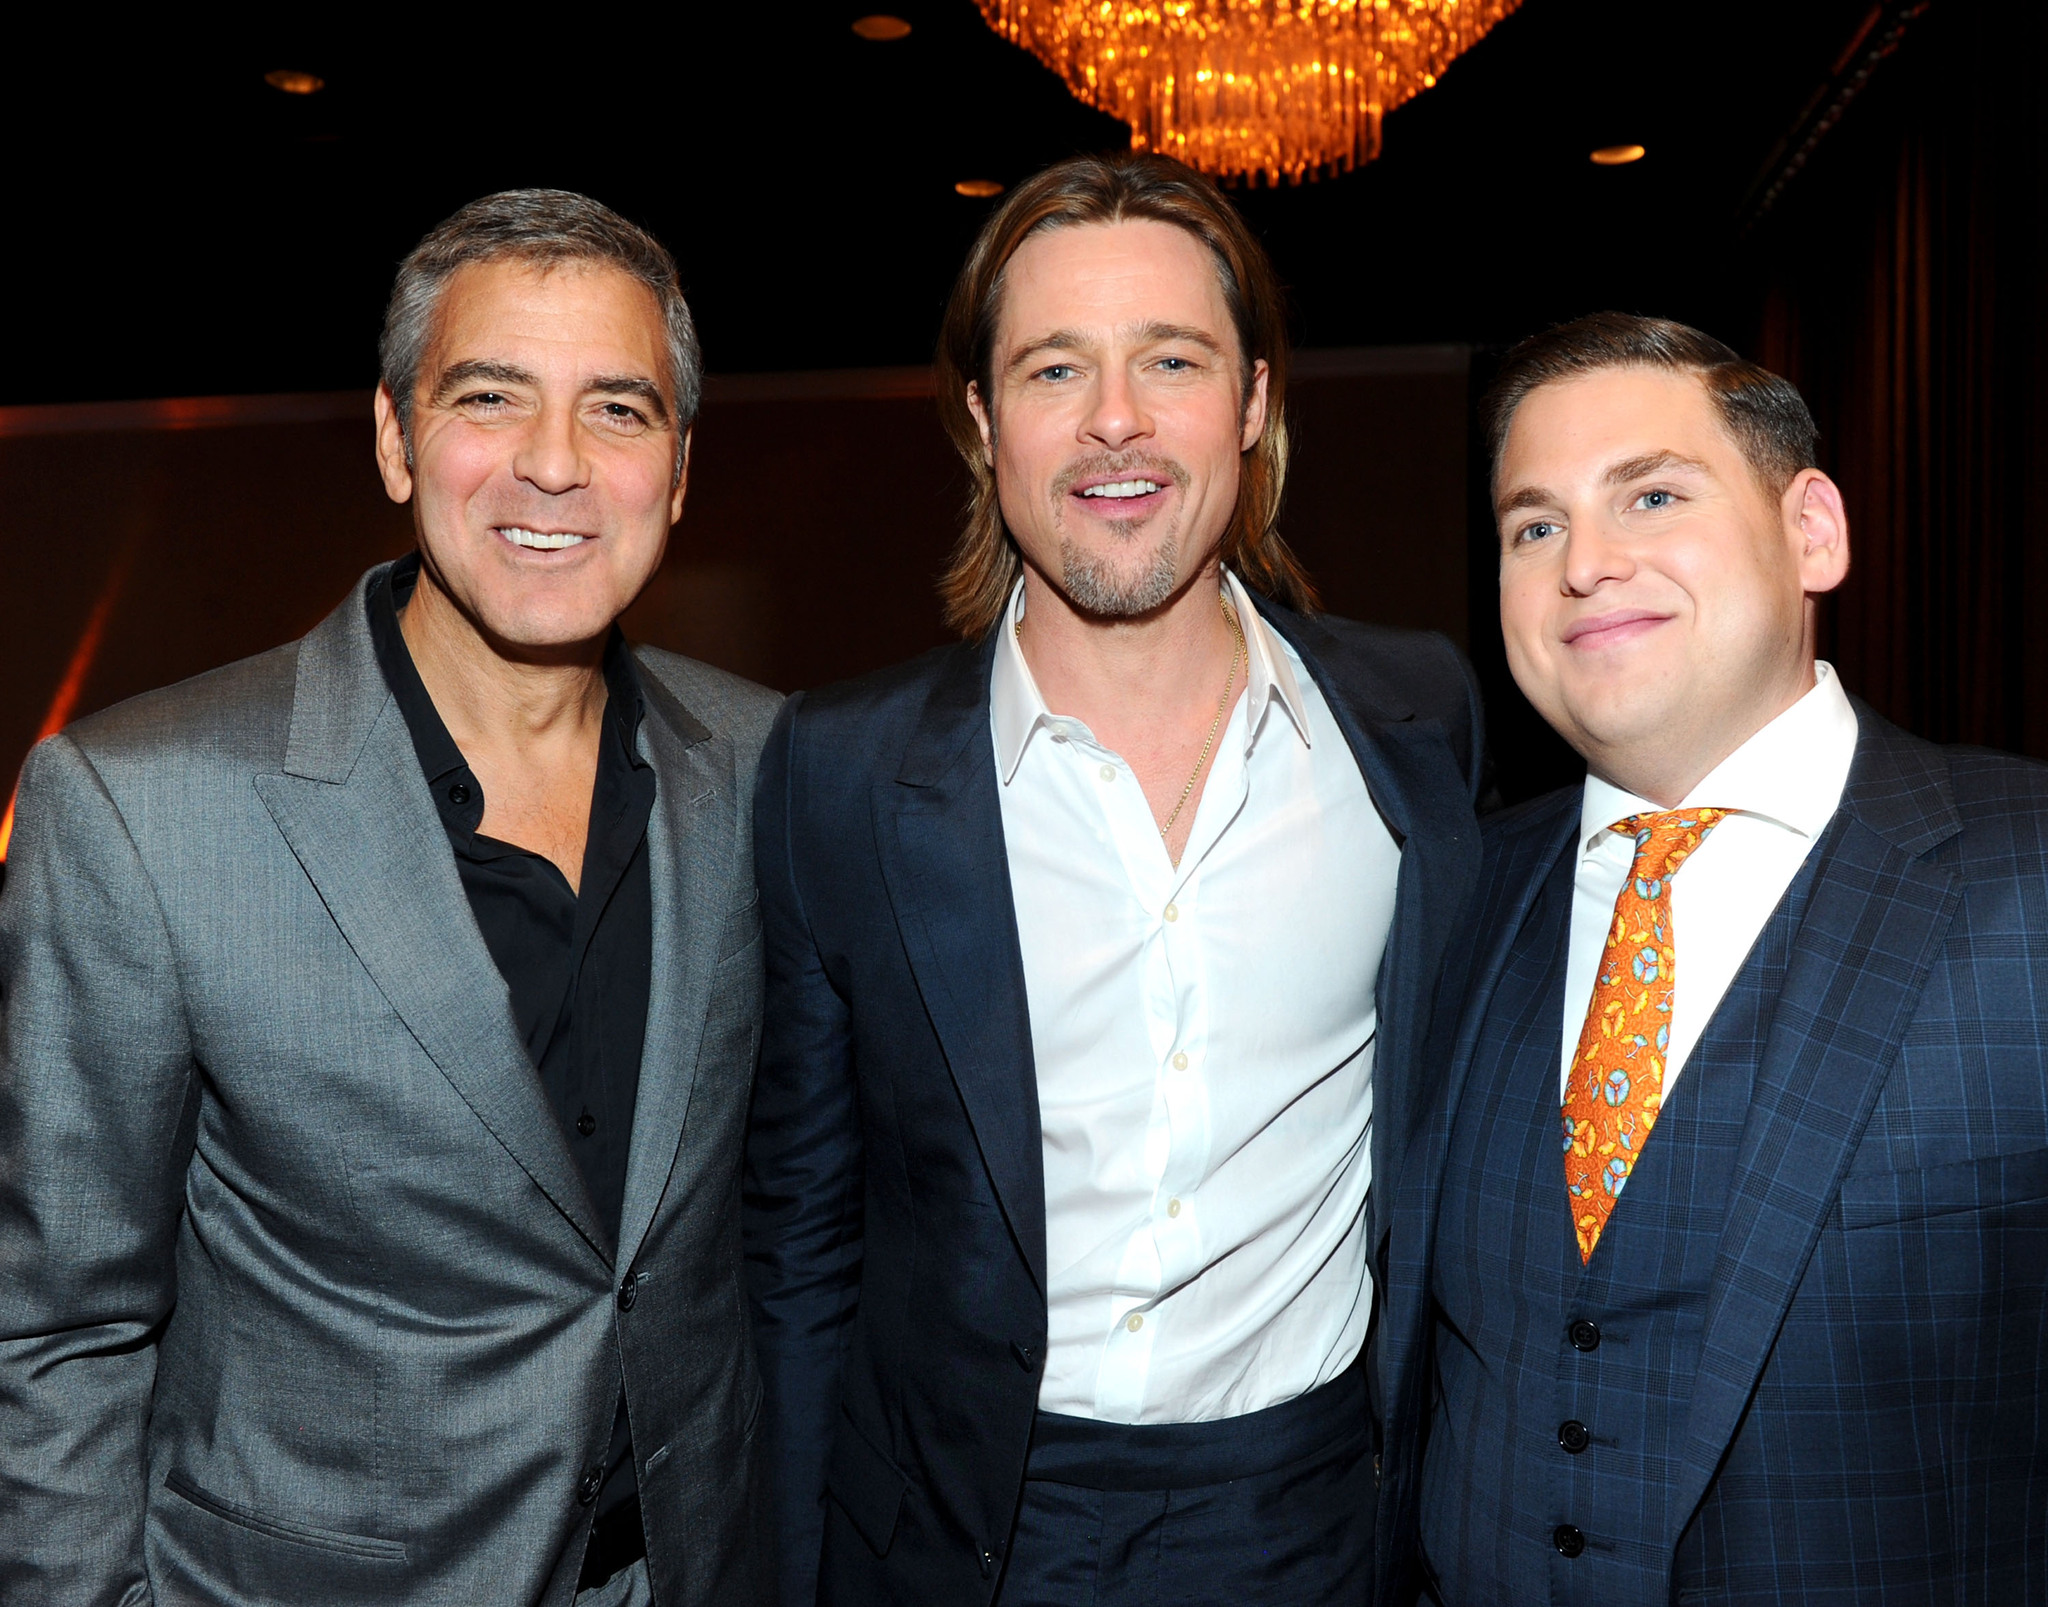 Brad Pitt, George Clooney and Jonah Hill